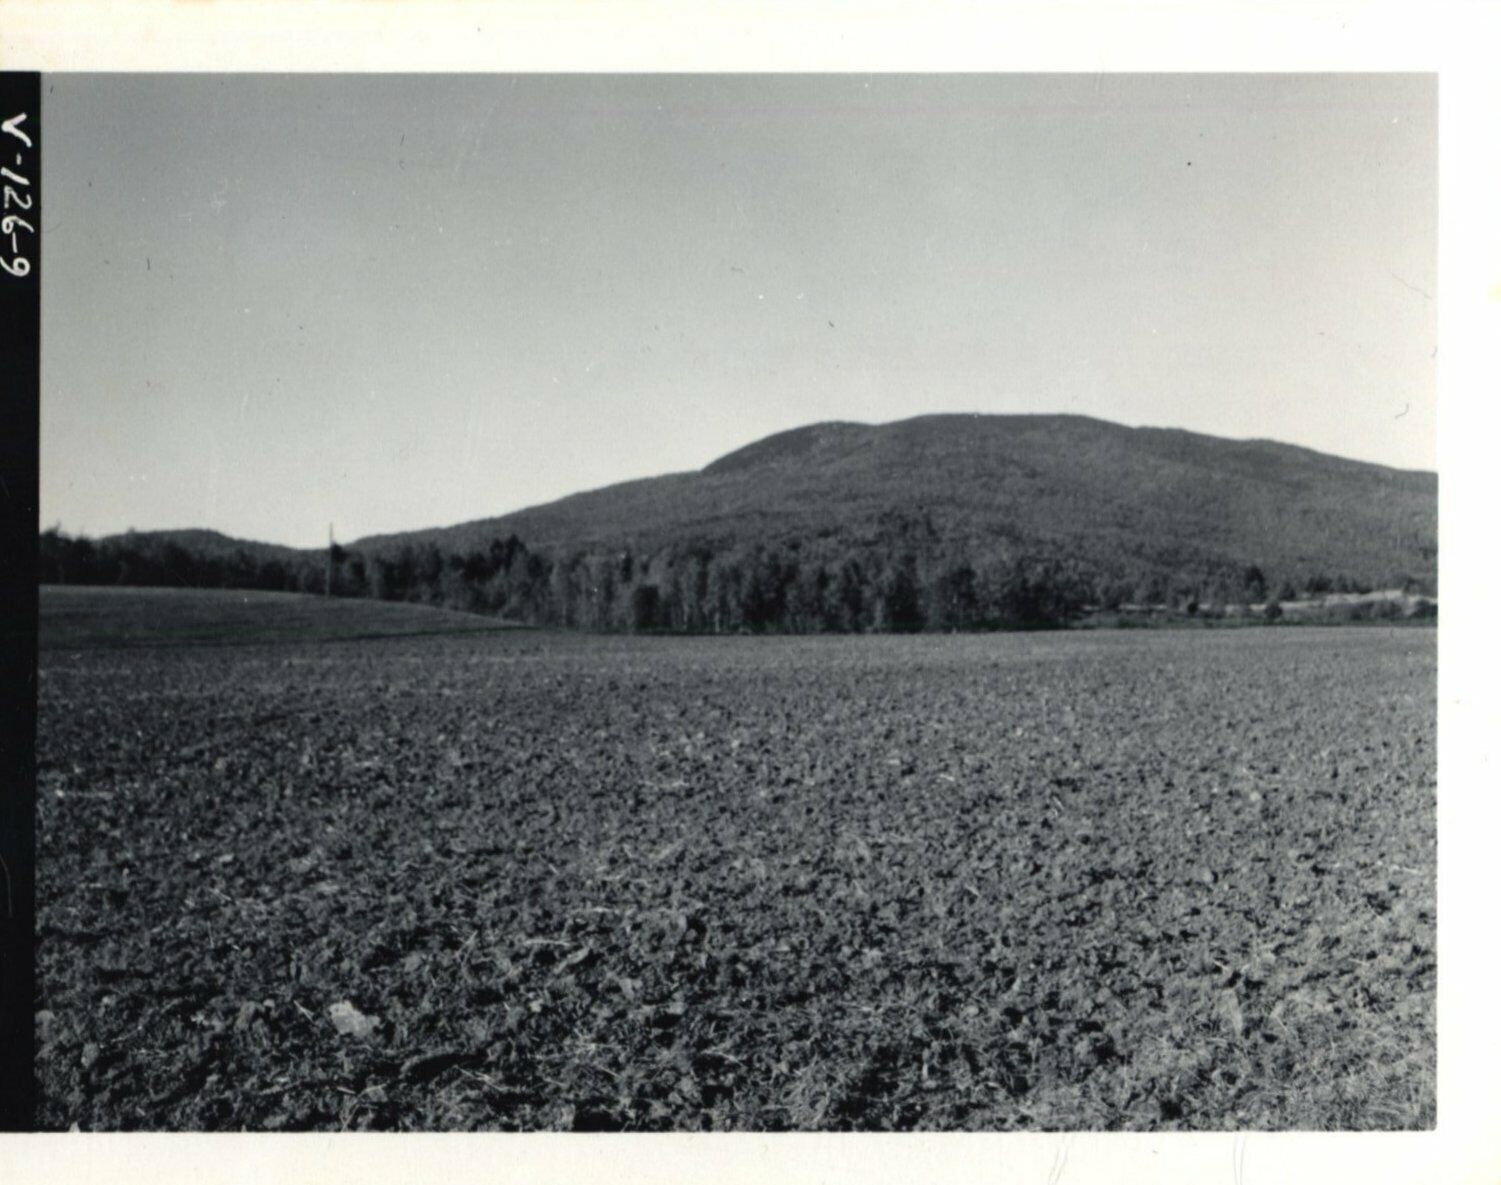 WINSTON BANFILL FARM - Rare PHOTOGRAPH - Lemington, VERMONT - Stubble Mulch 